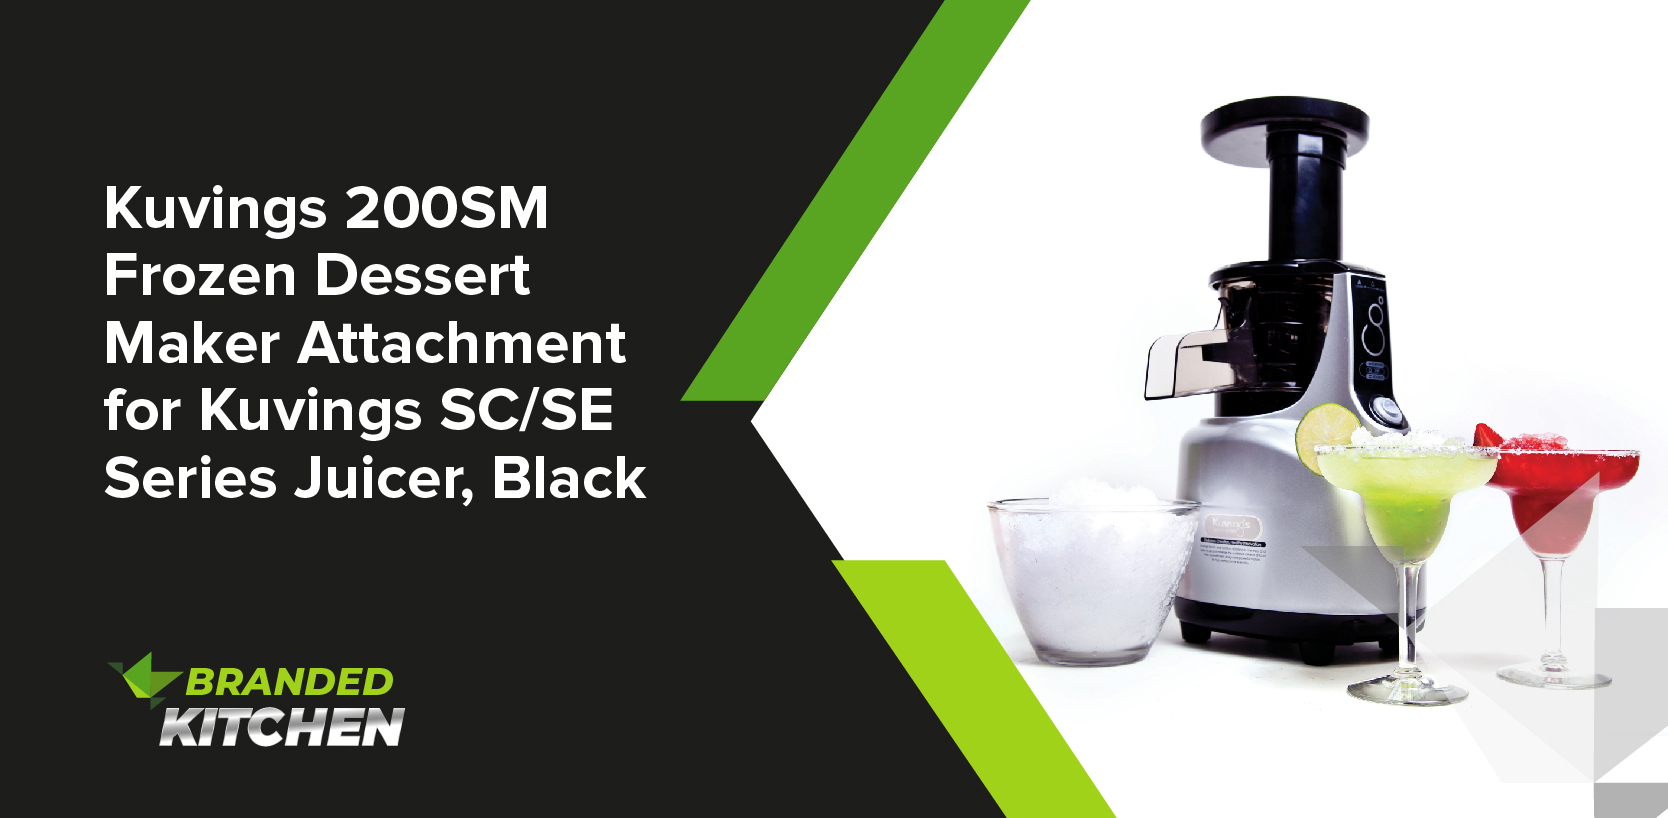 Kuvings 200SM Frozen Dessert Maker Attachment for Kuvings SC/SE Series Juicer, Black